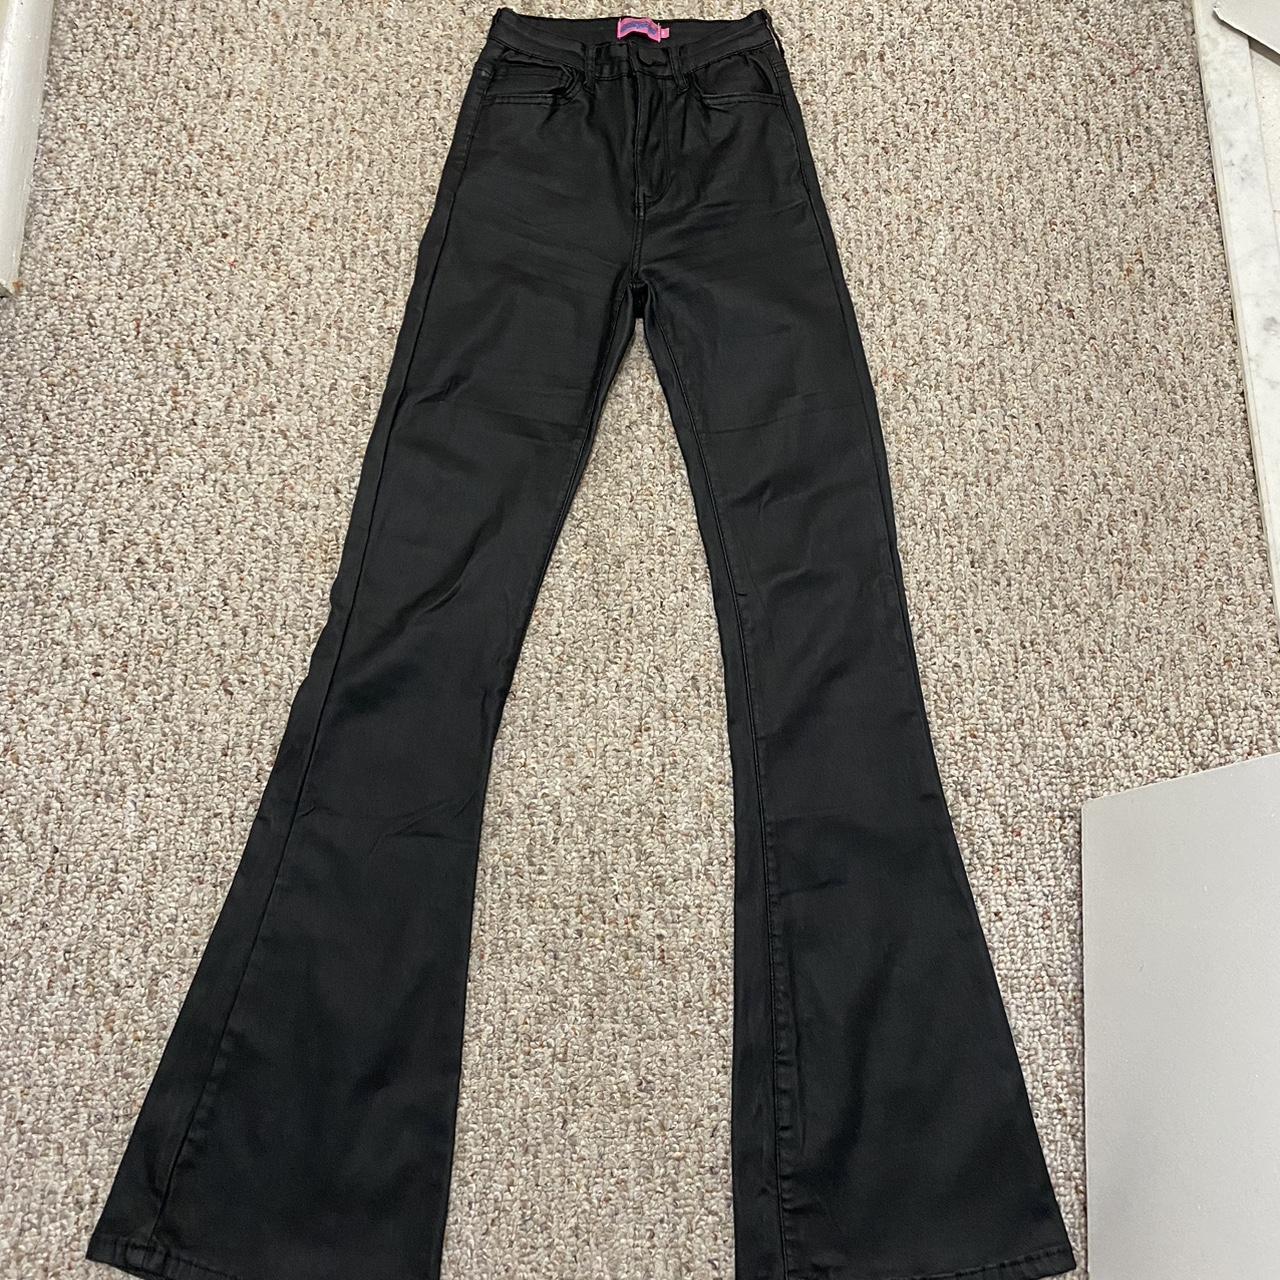 Edikted leather flare pants in an xs - Depop